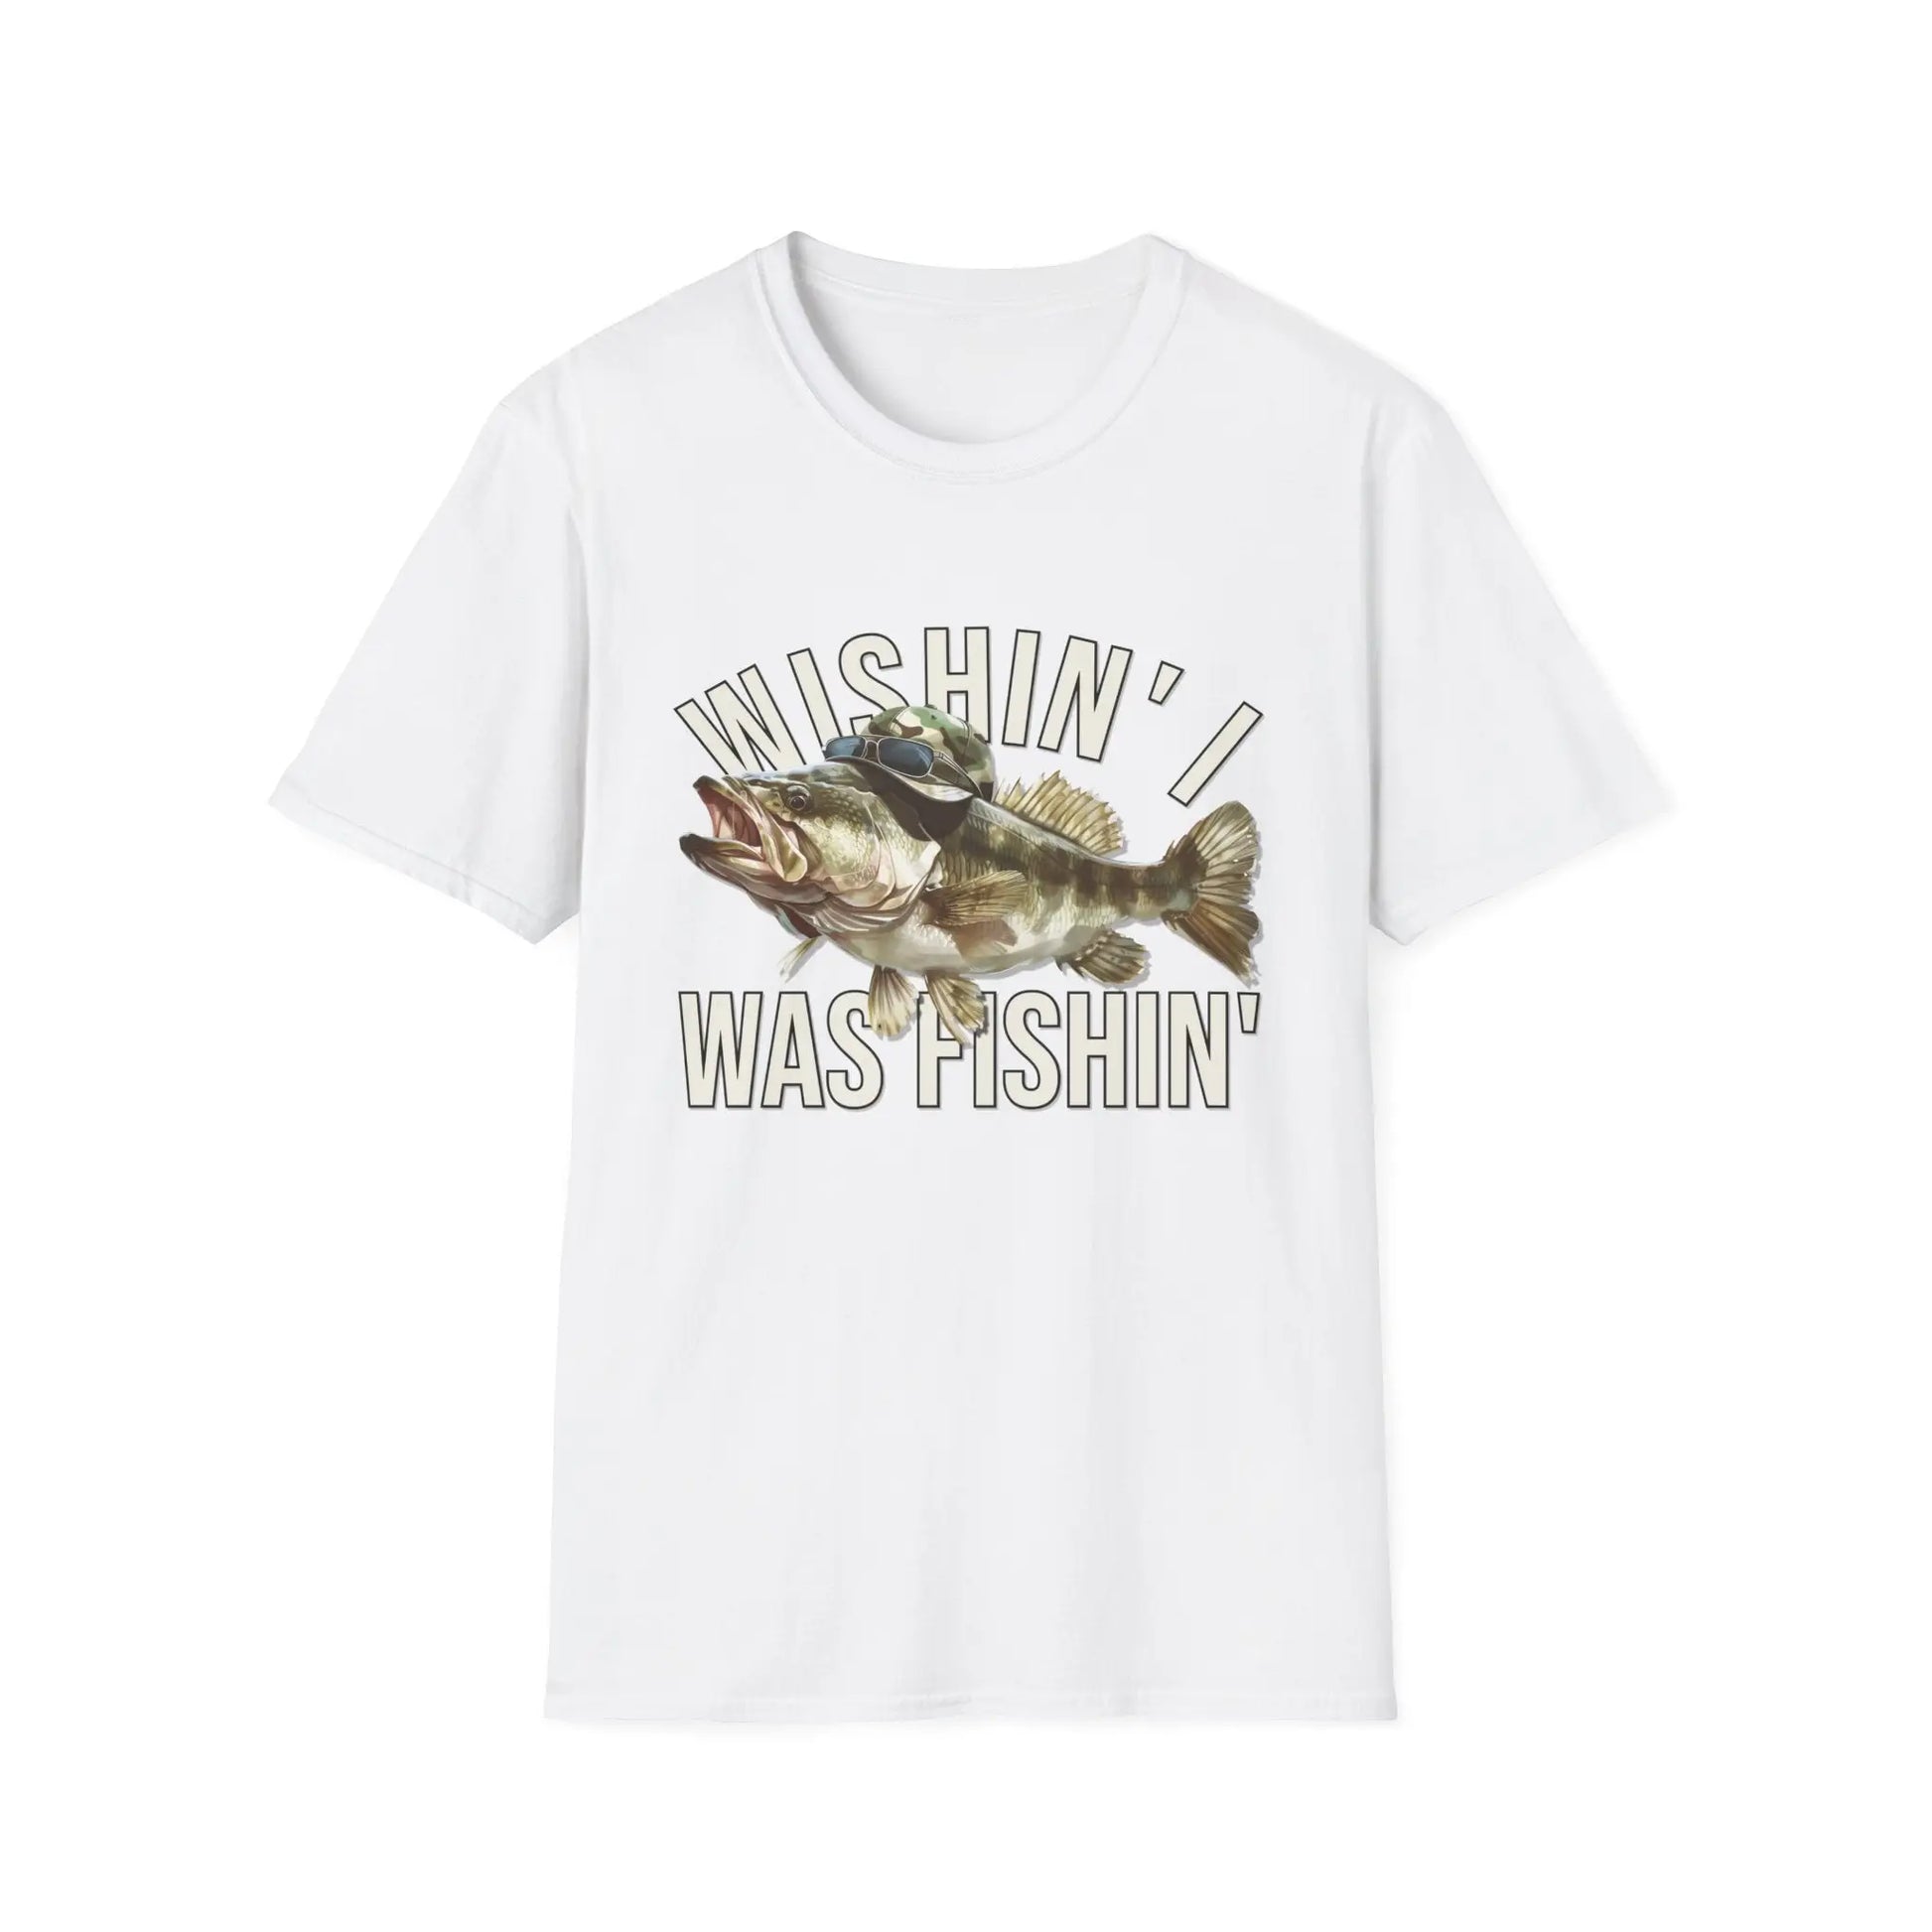 Wishin' I Was Fishin' Women's T-Shirt - Wicked Tees